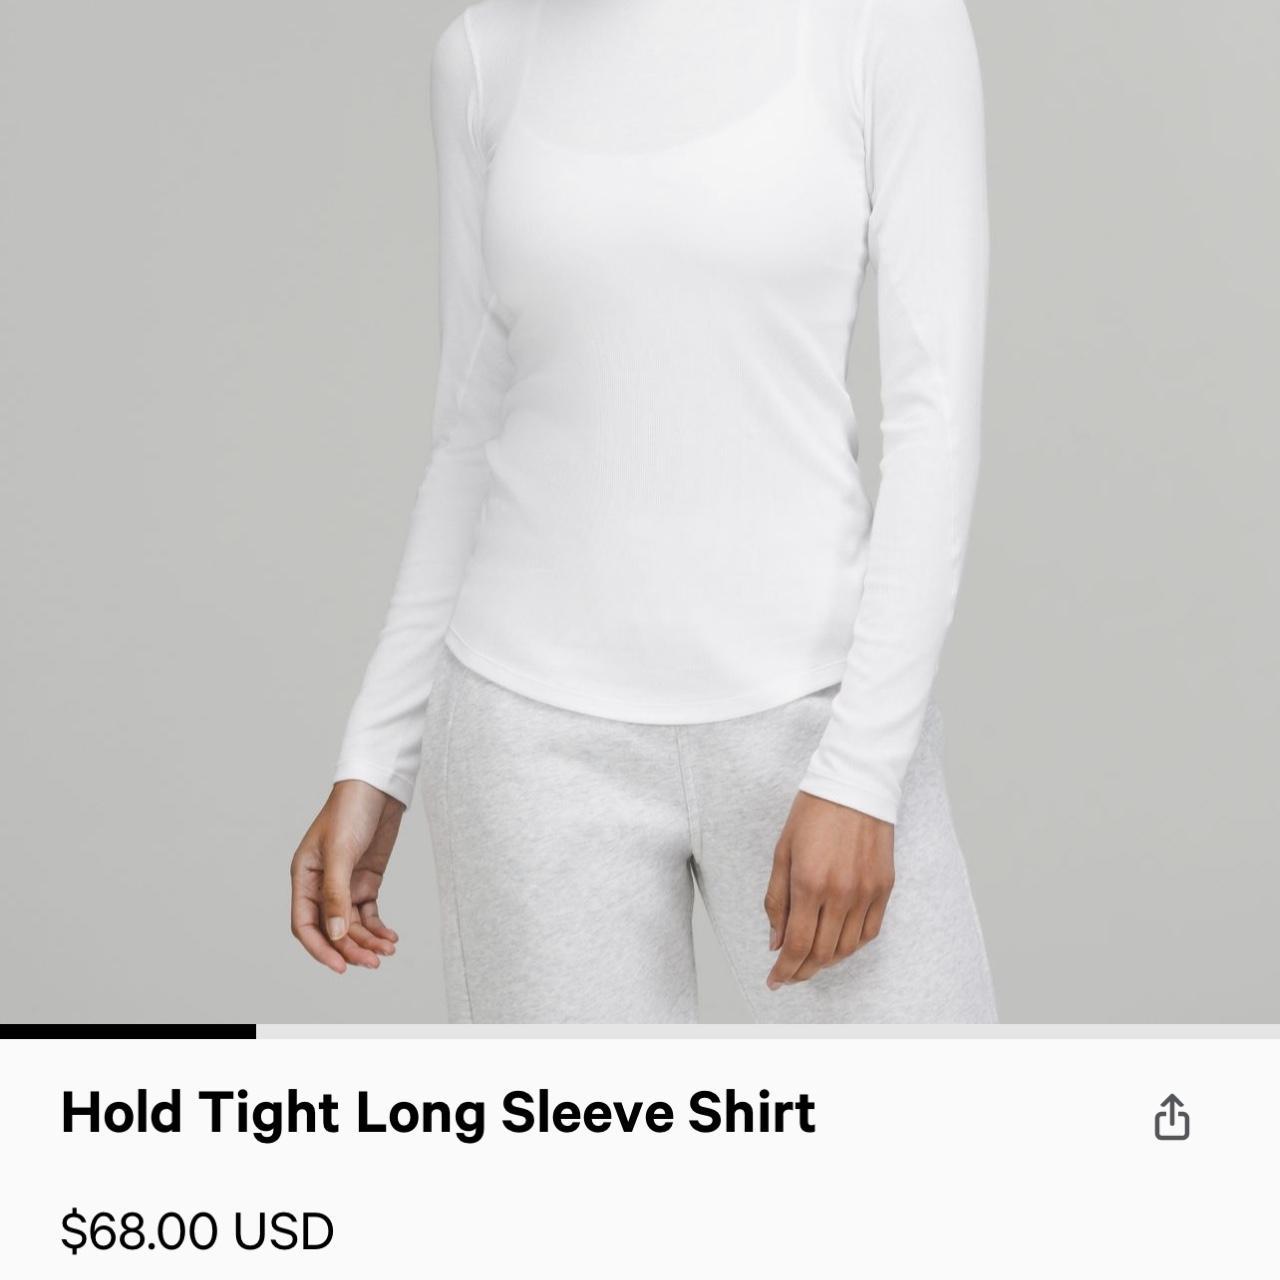 Lululemon Hold Tight Long-Sleeve Shirt